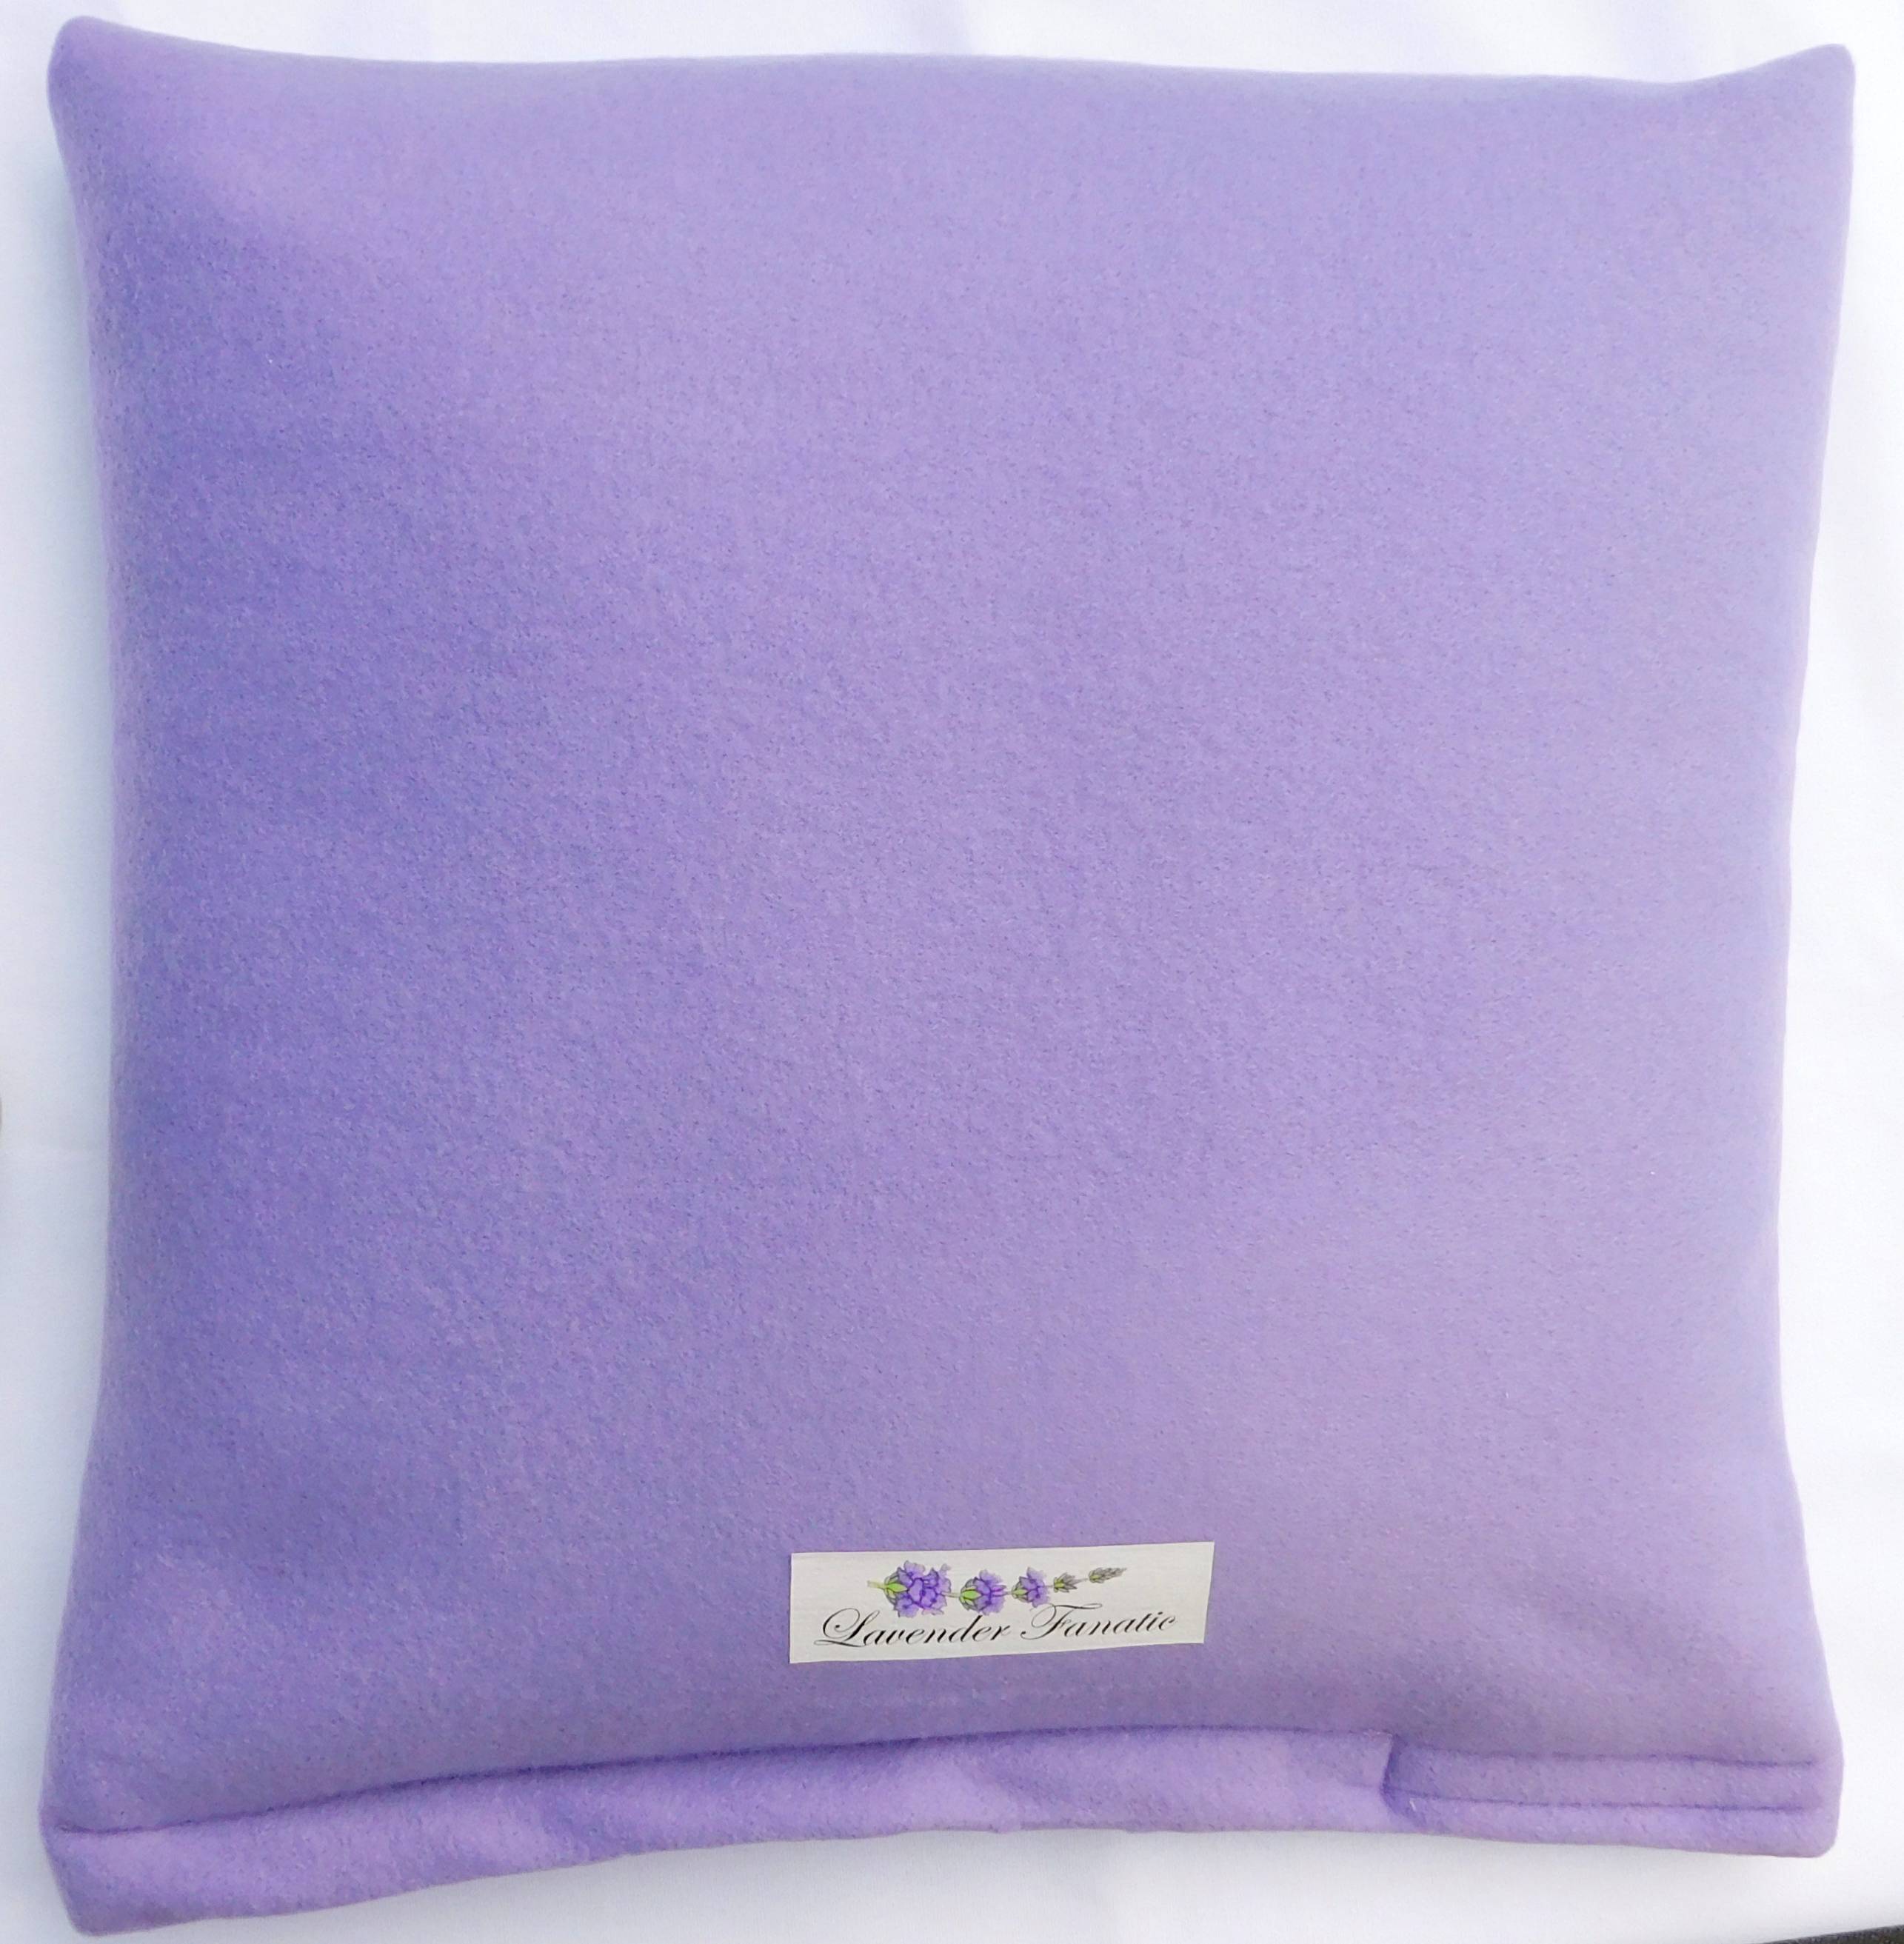 Purple fleece lavender and buckwheat pillow.